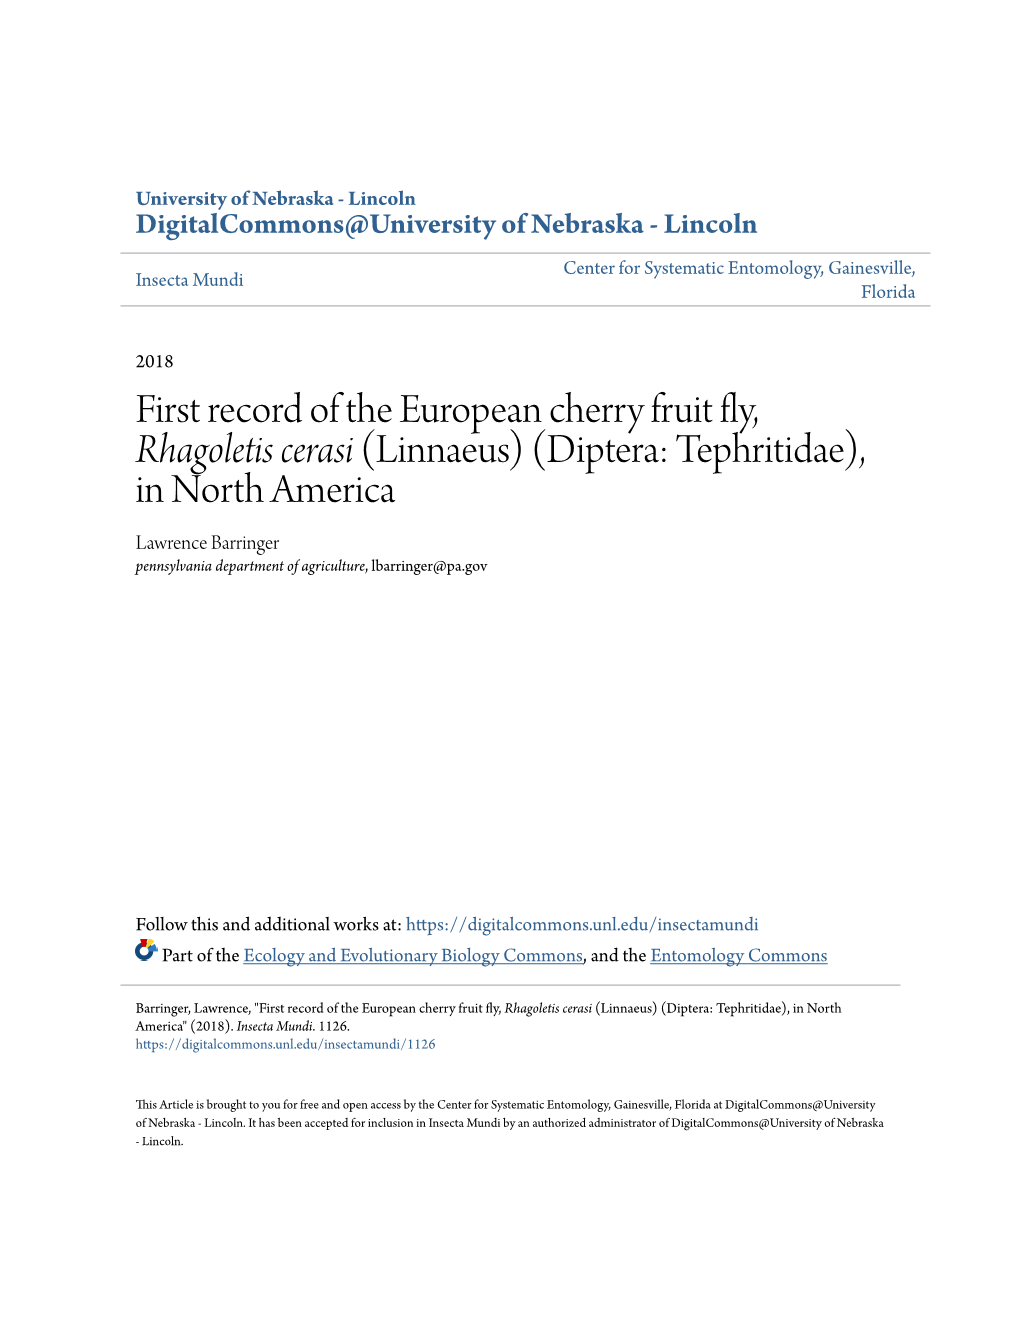 First Record of the European Cherry Fruit Fly, &lt;I&gt;Rhagoletis Cerasi&lt;/I